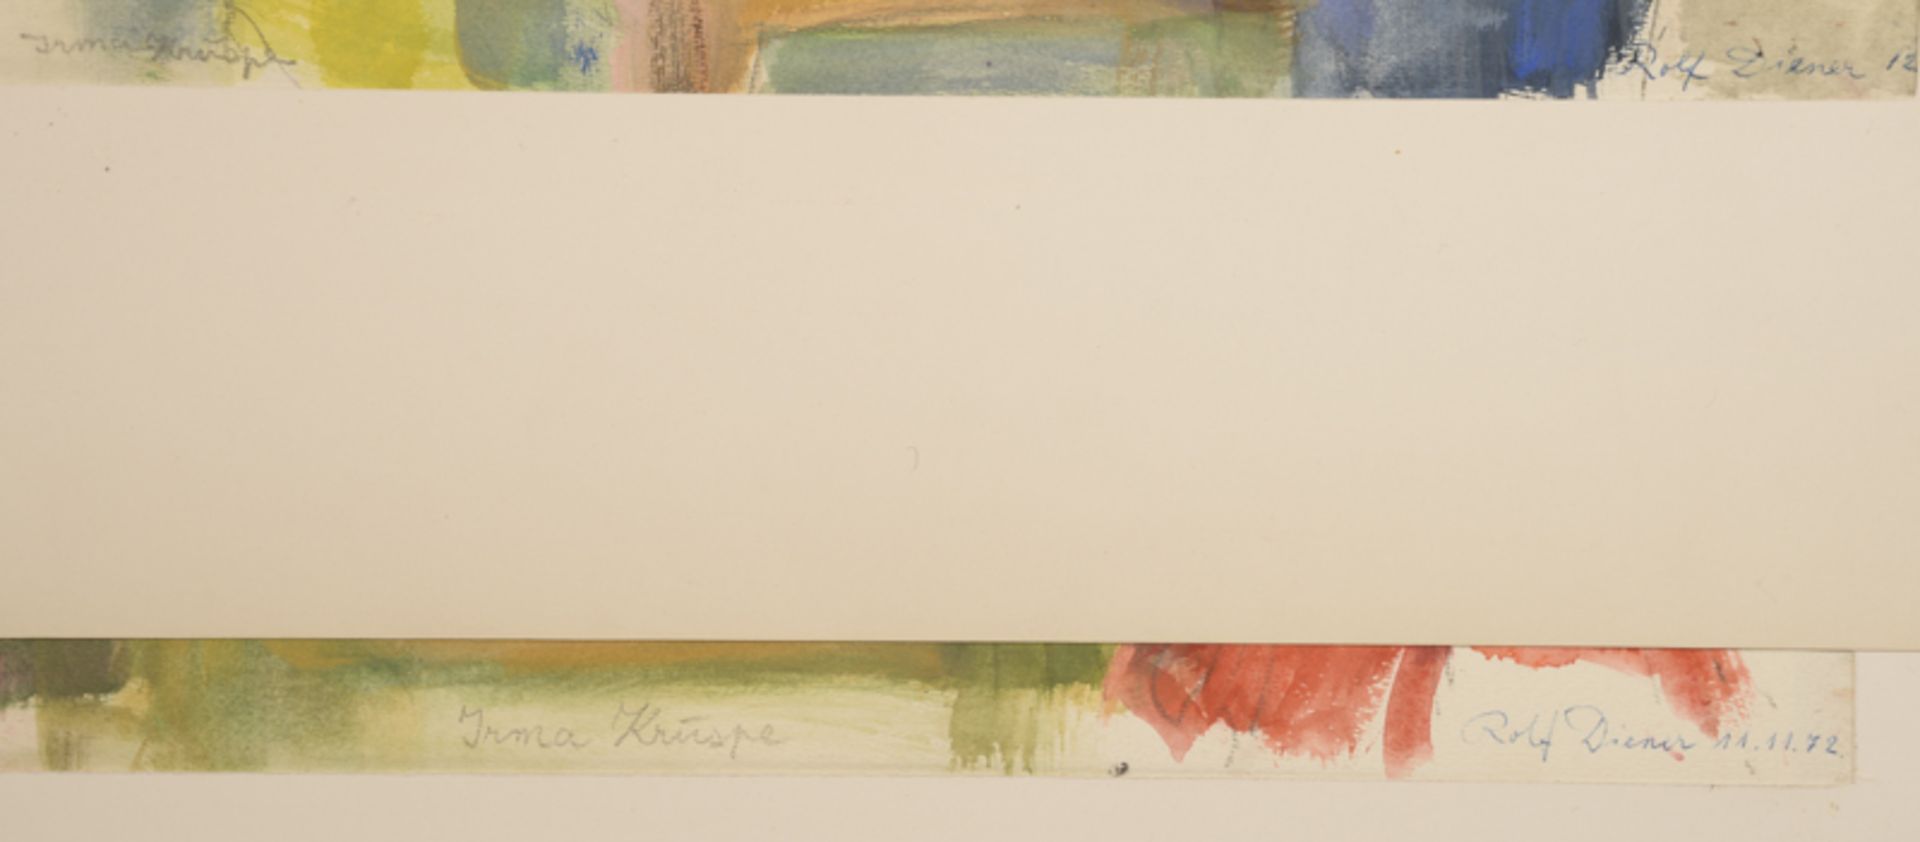 Rolf Diener (1906 - 1988) - 1 Paar Aquarelle auf Papier, "Portrait Irma Kruspe", 12.5.73 / 11.11. - Image 2 of 2